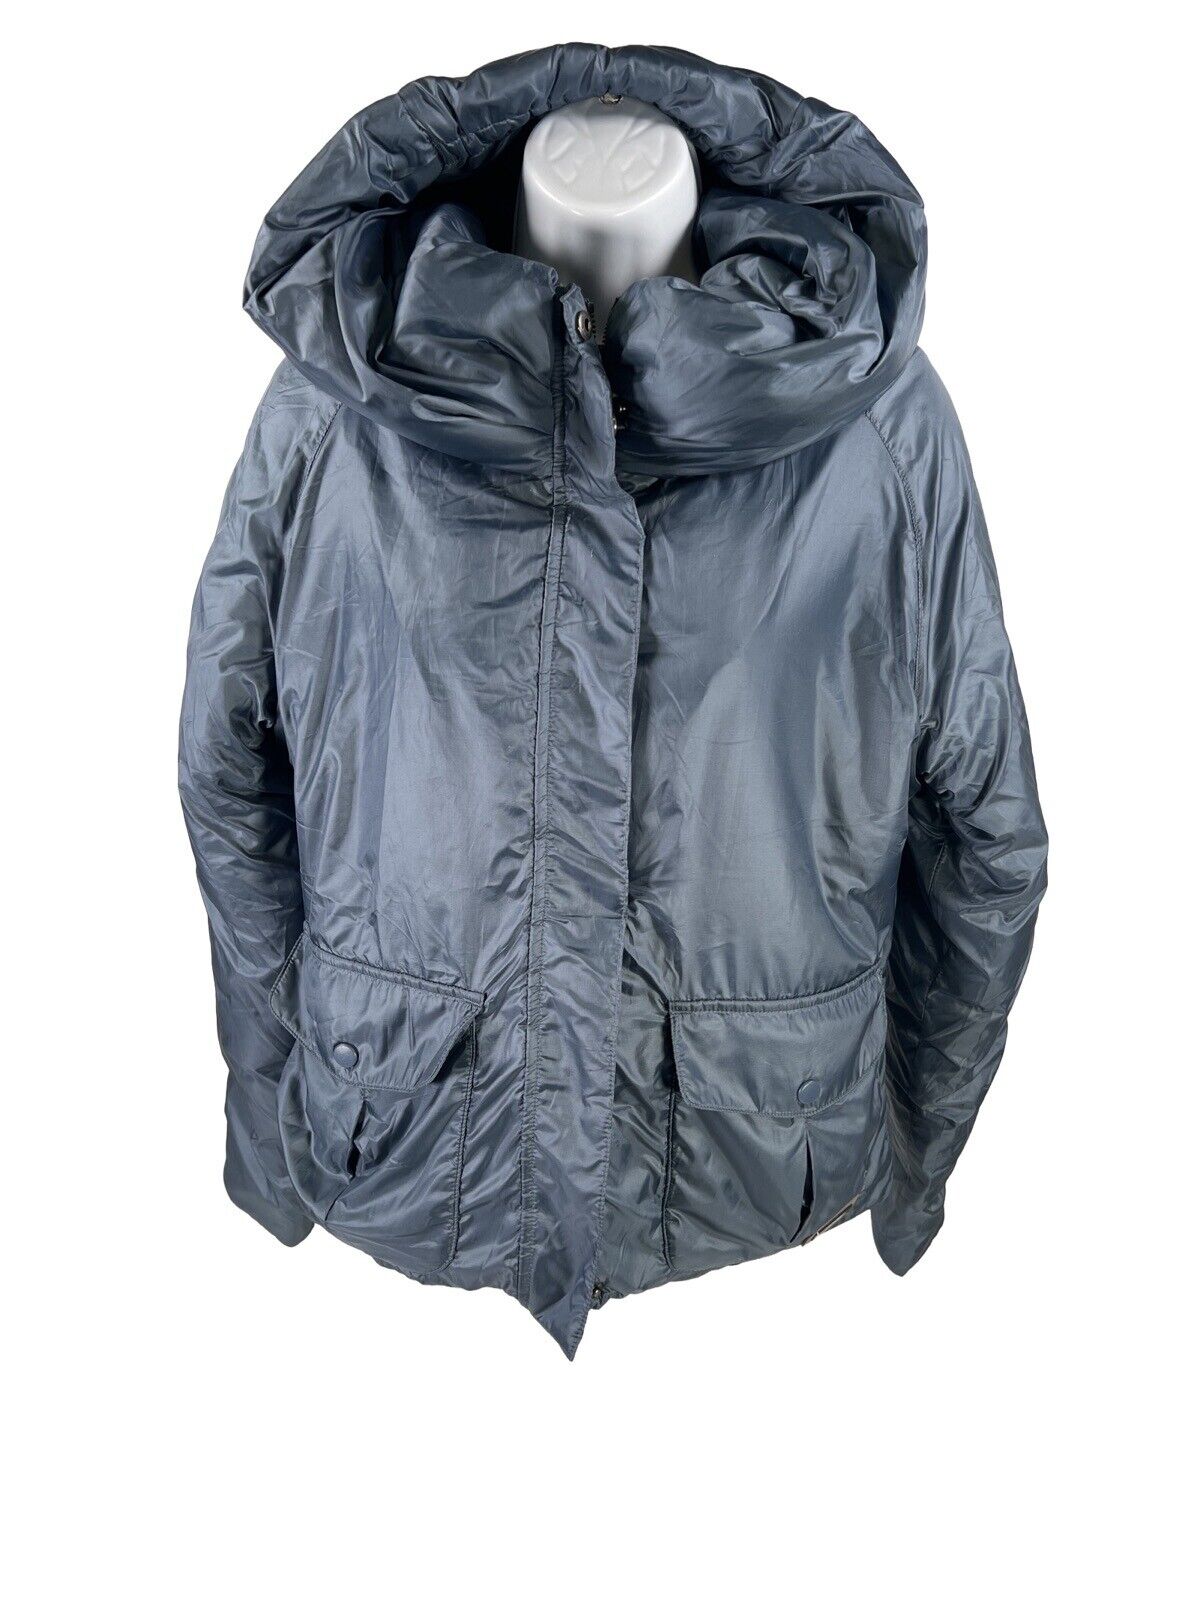 Merrell Abrigo de invierno acolchado Opti Warm con capucha azul para mujer - M